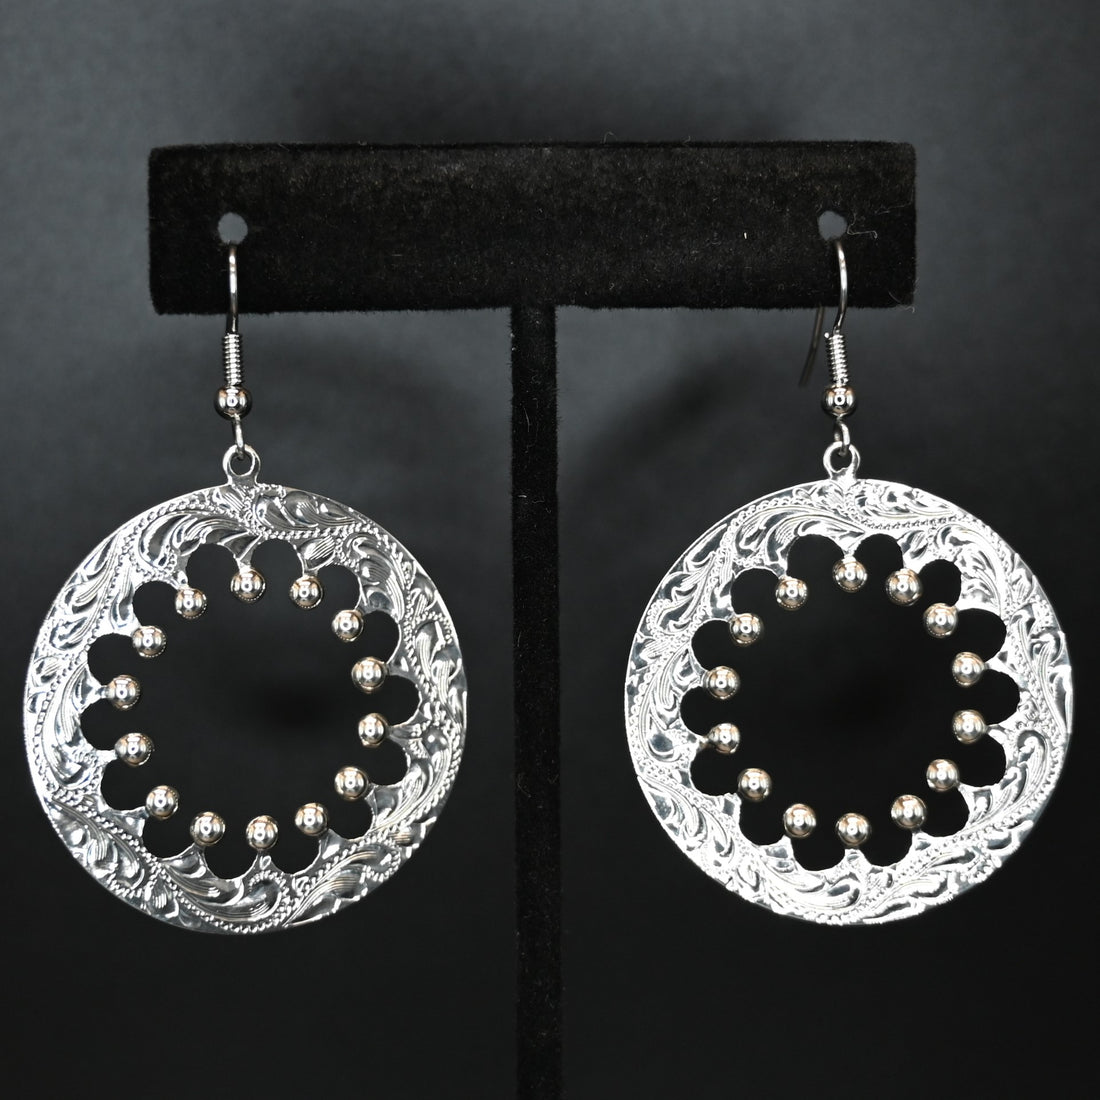 Blair Design Wagon Wheel in Sterling Silver Statement Earrings view of earrings